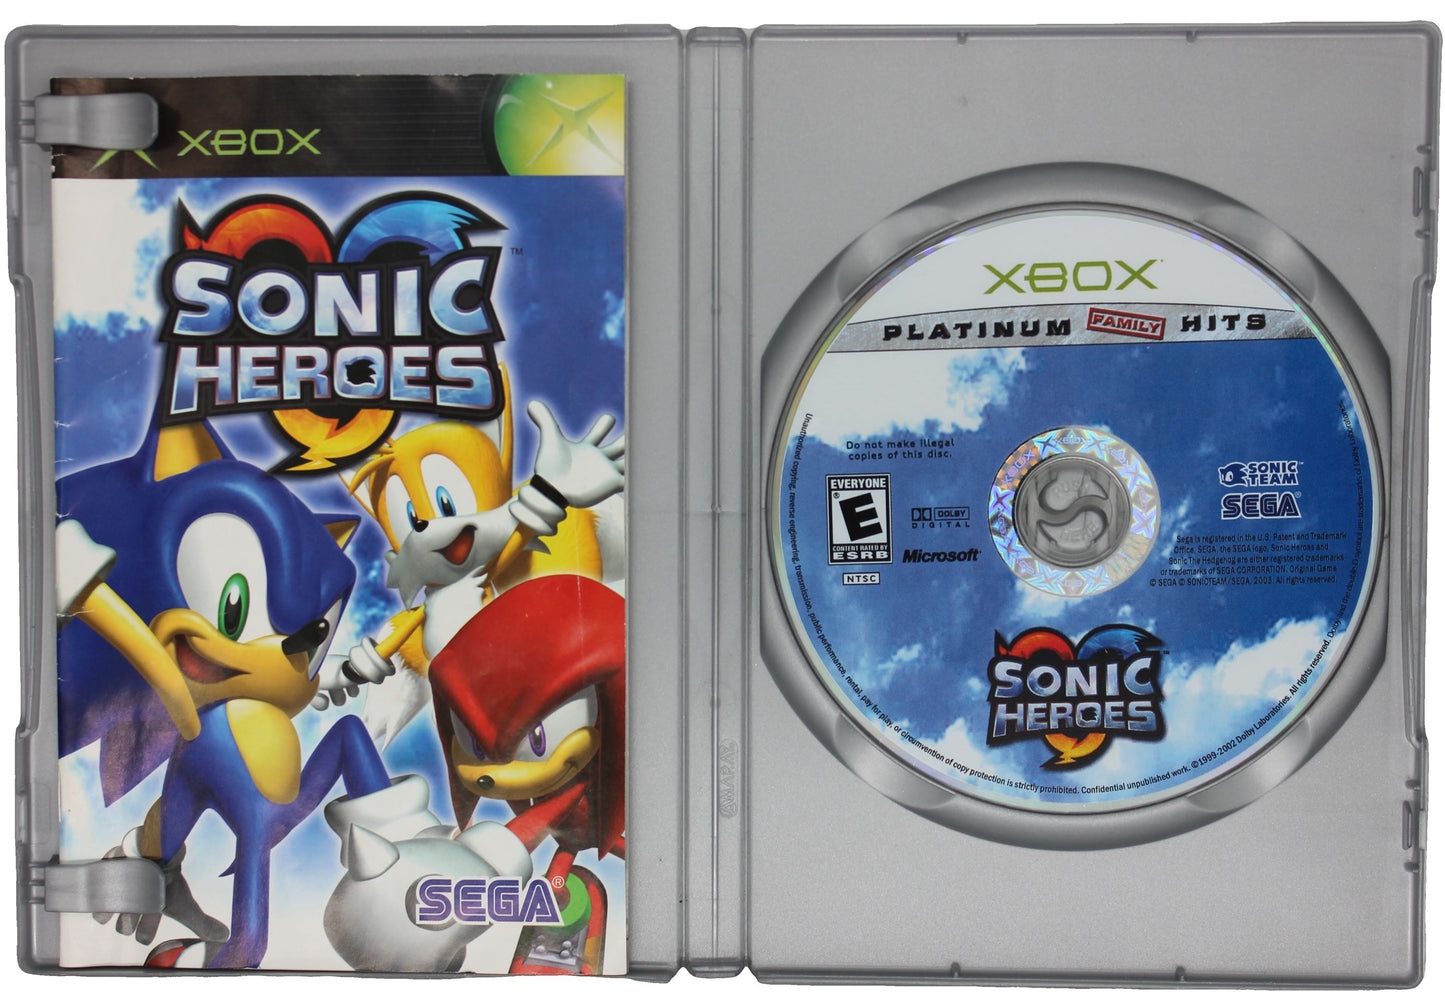 Sonic: Heroes [Platinum Family Hits]